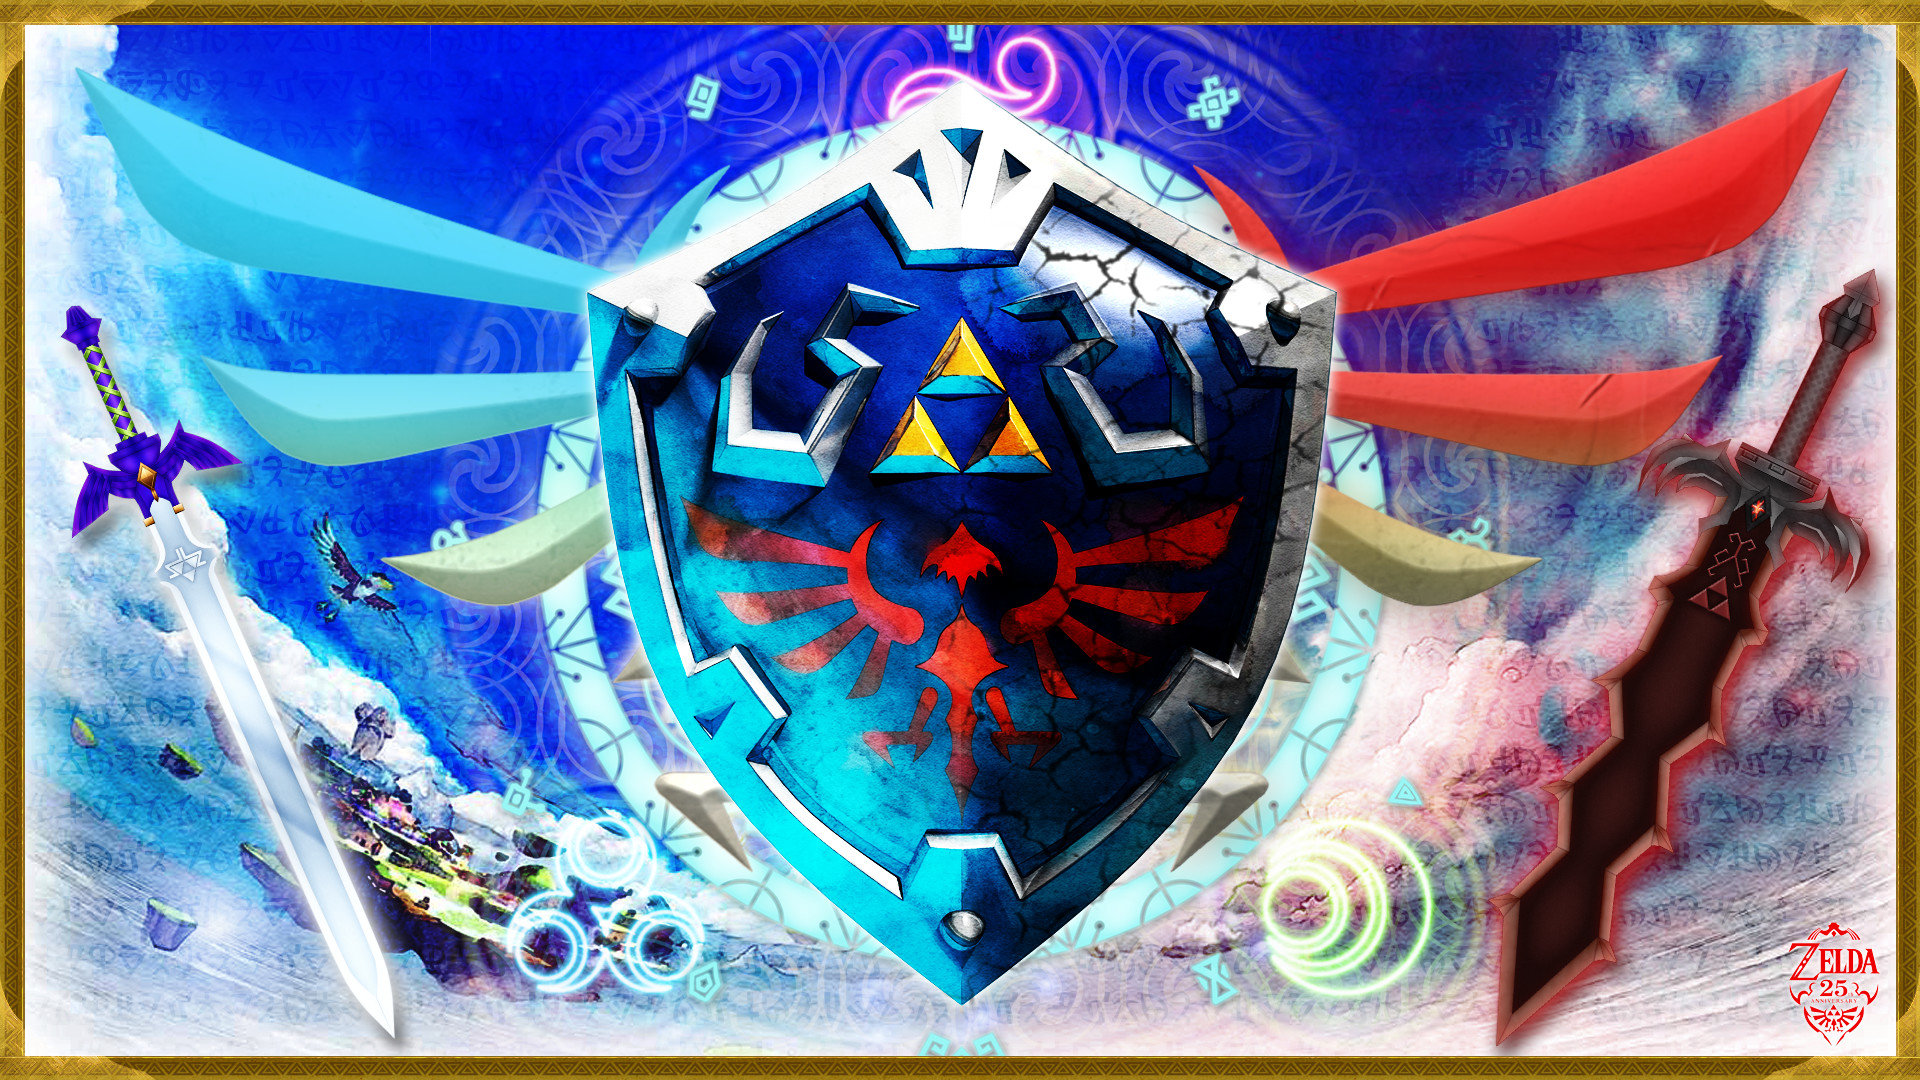 High resolution The Legend Of Zelda: Skyward Sword full hd wallpaper ID:442255 for computer